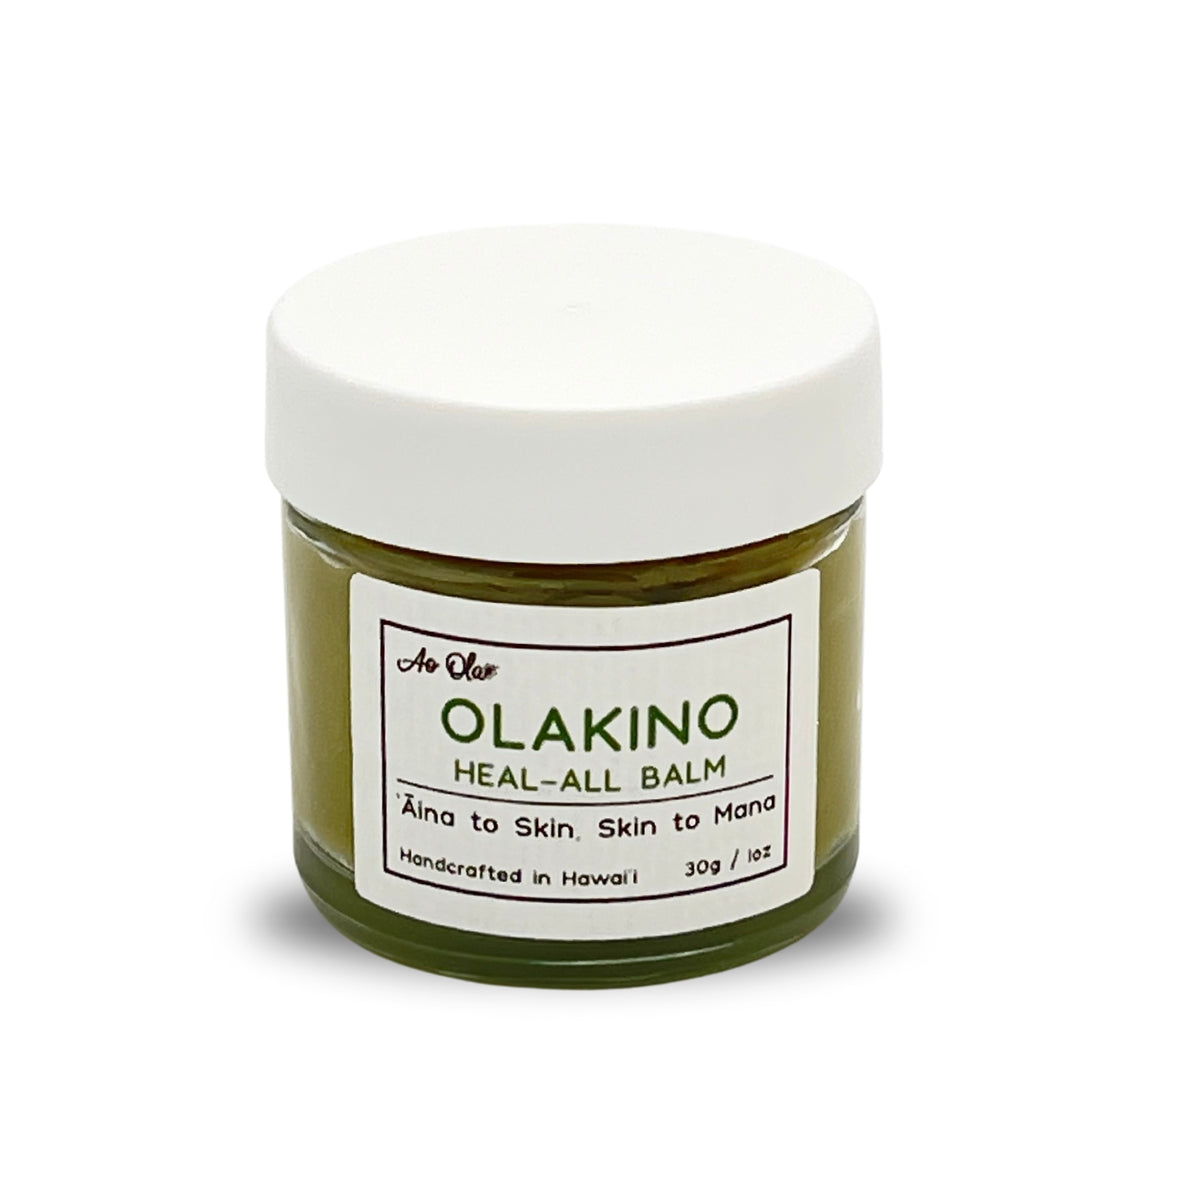 Pop-Up Mākeke - Botanica Skincare - Olakino Healing Balm - Front View